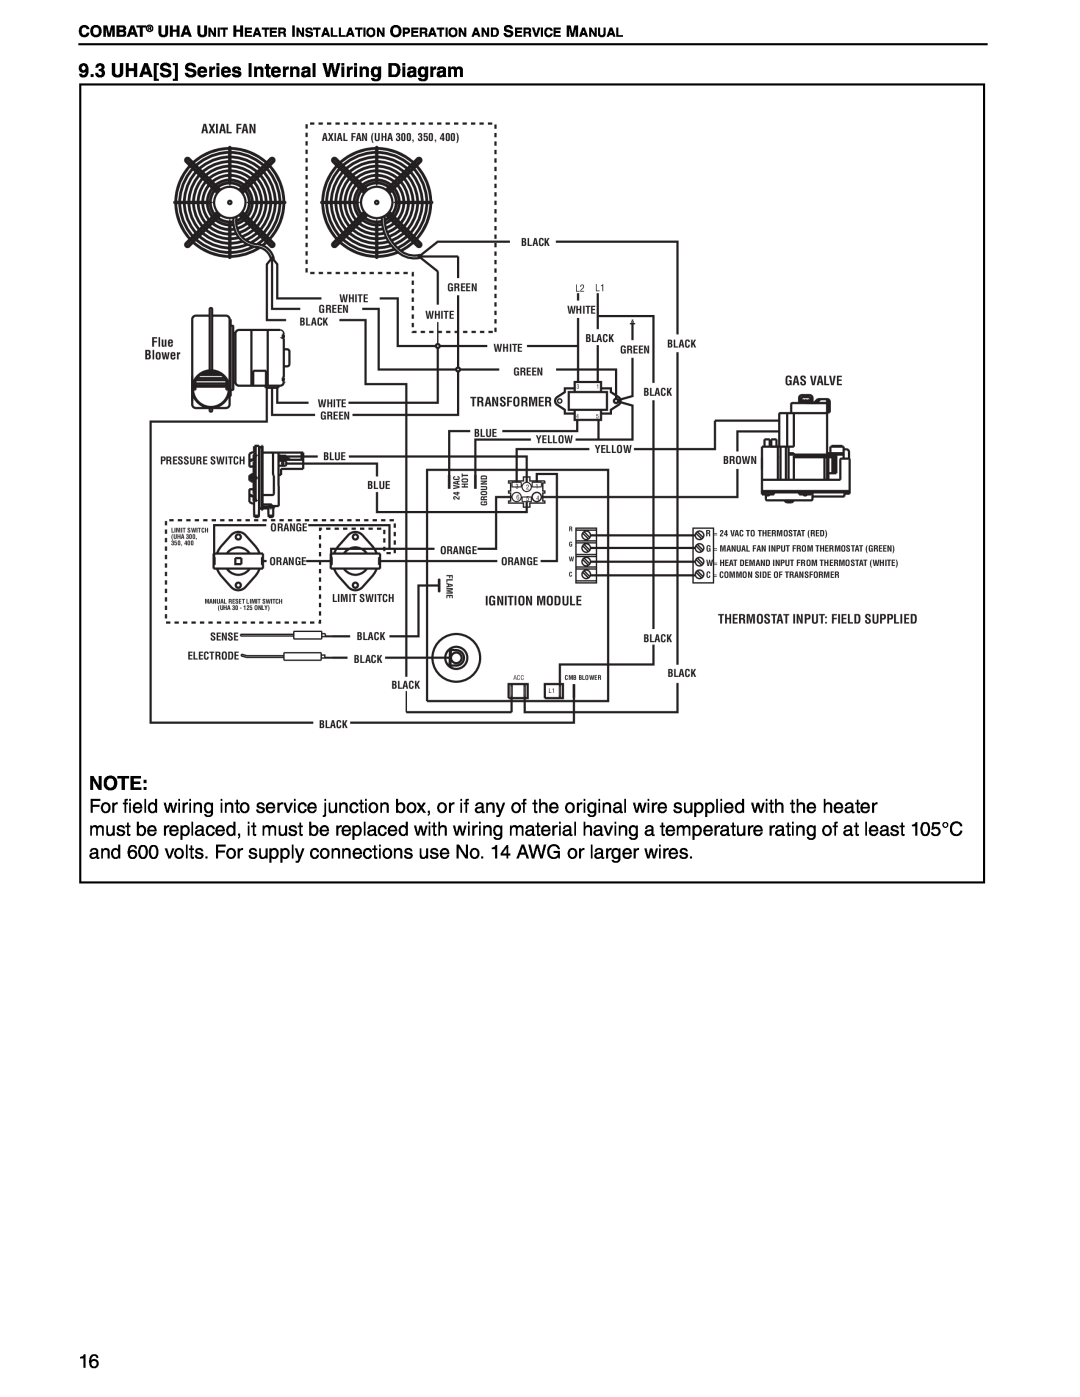 Roberts Gorden 350, 200, 150, 400, 300, 175, 225 250 service manual UHAS Series Internal Wiring Diagram 